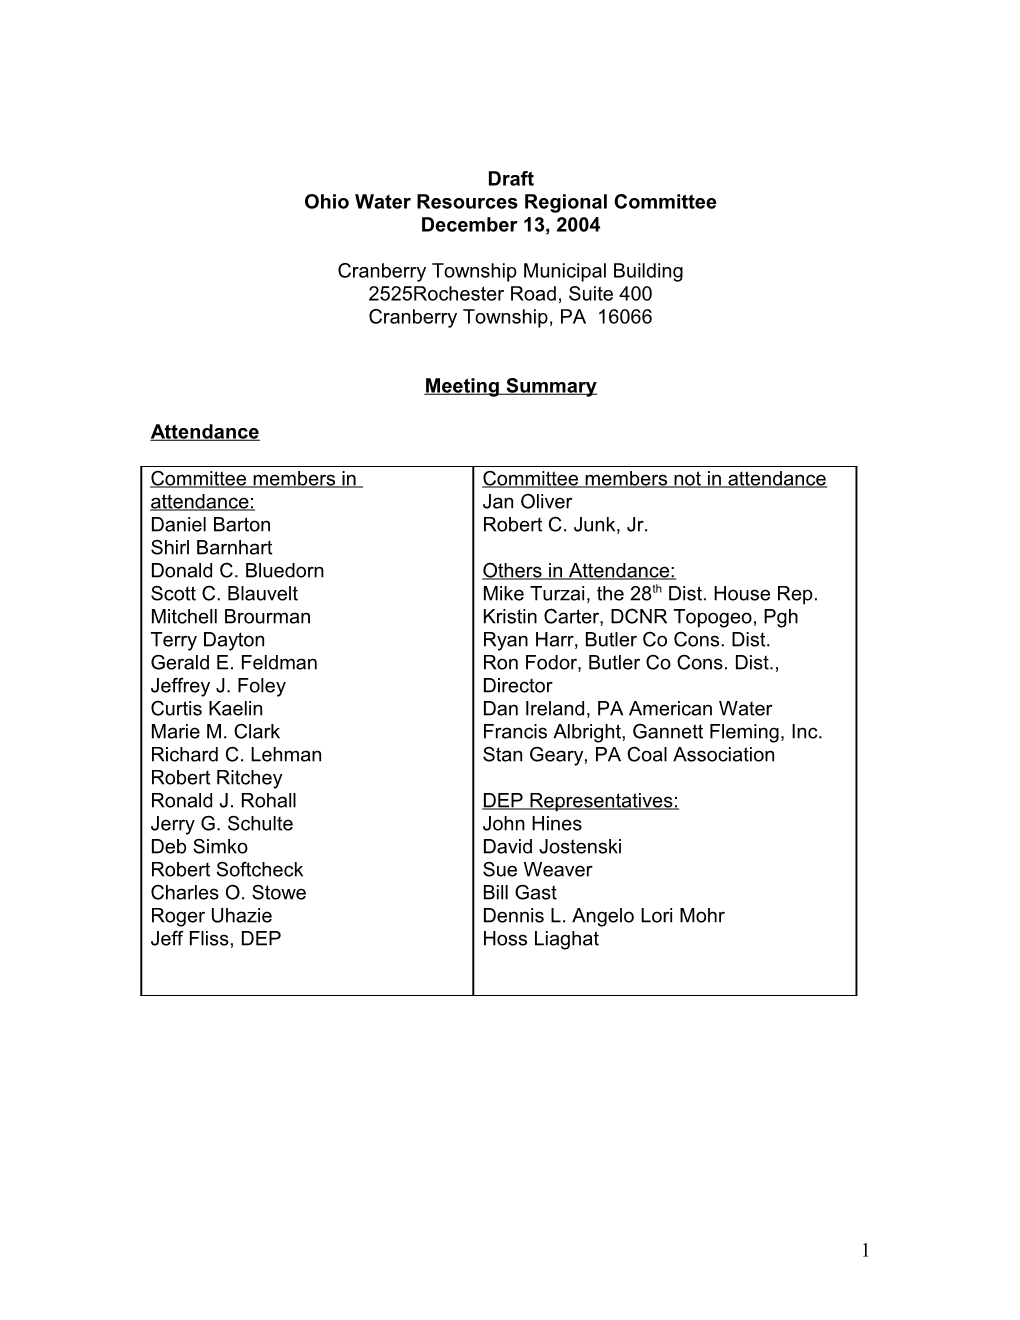 Ohio Water Resources Regional Committees